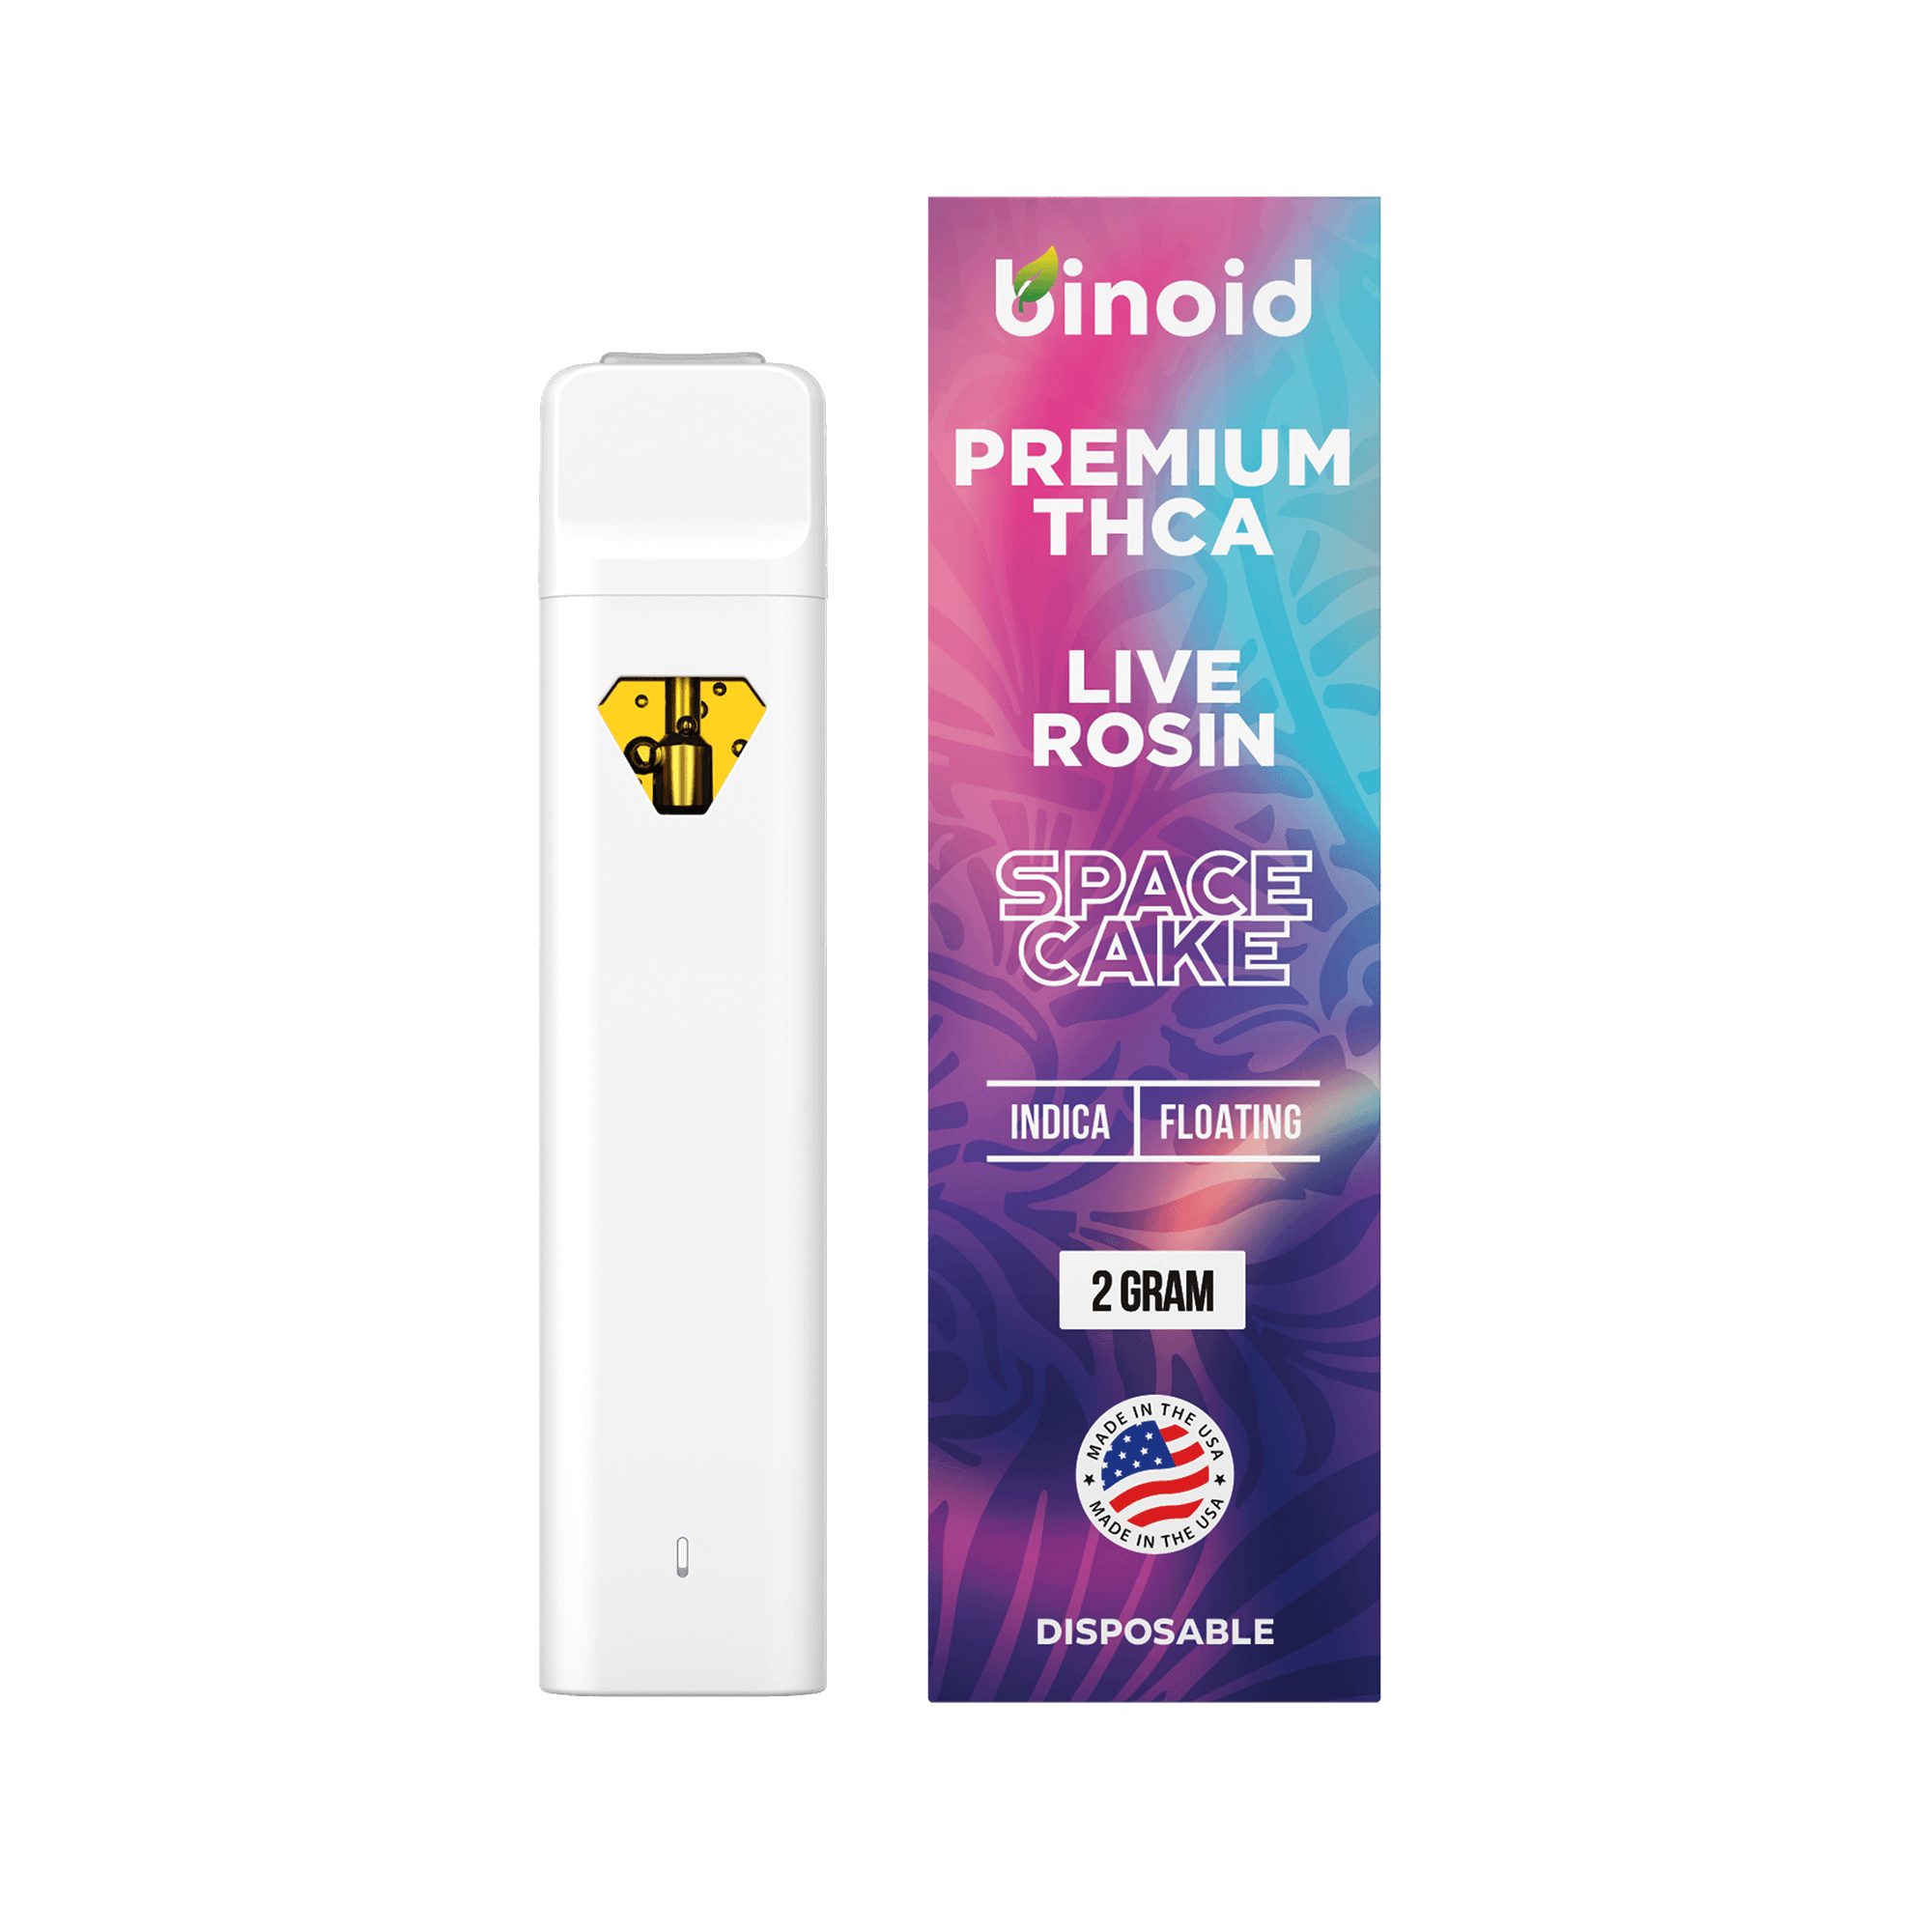 Binoid 2 Gram THCA Disposable Vapes – Live Rosin Best Price